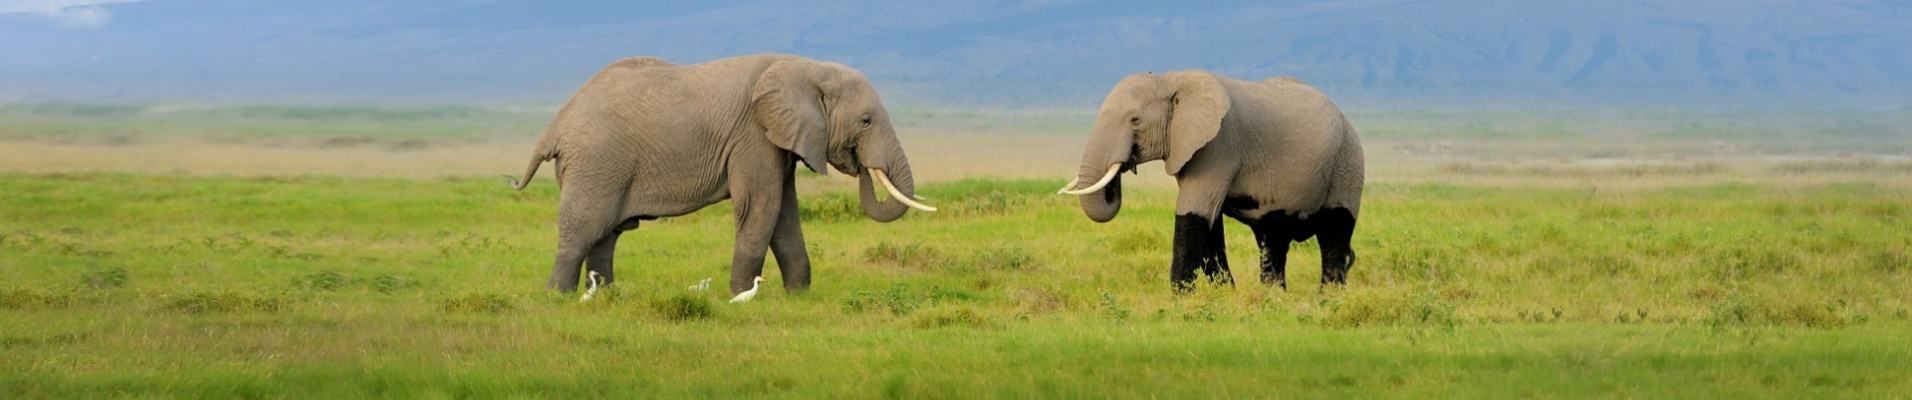 elephants kenya